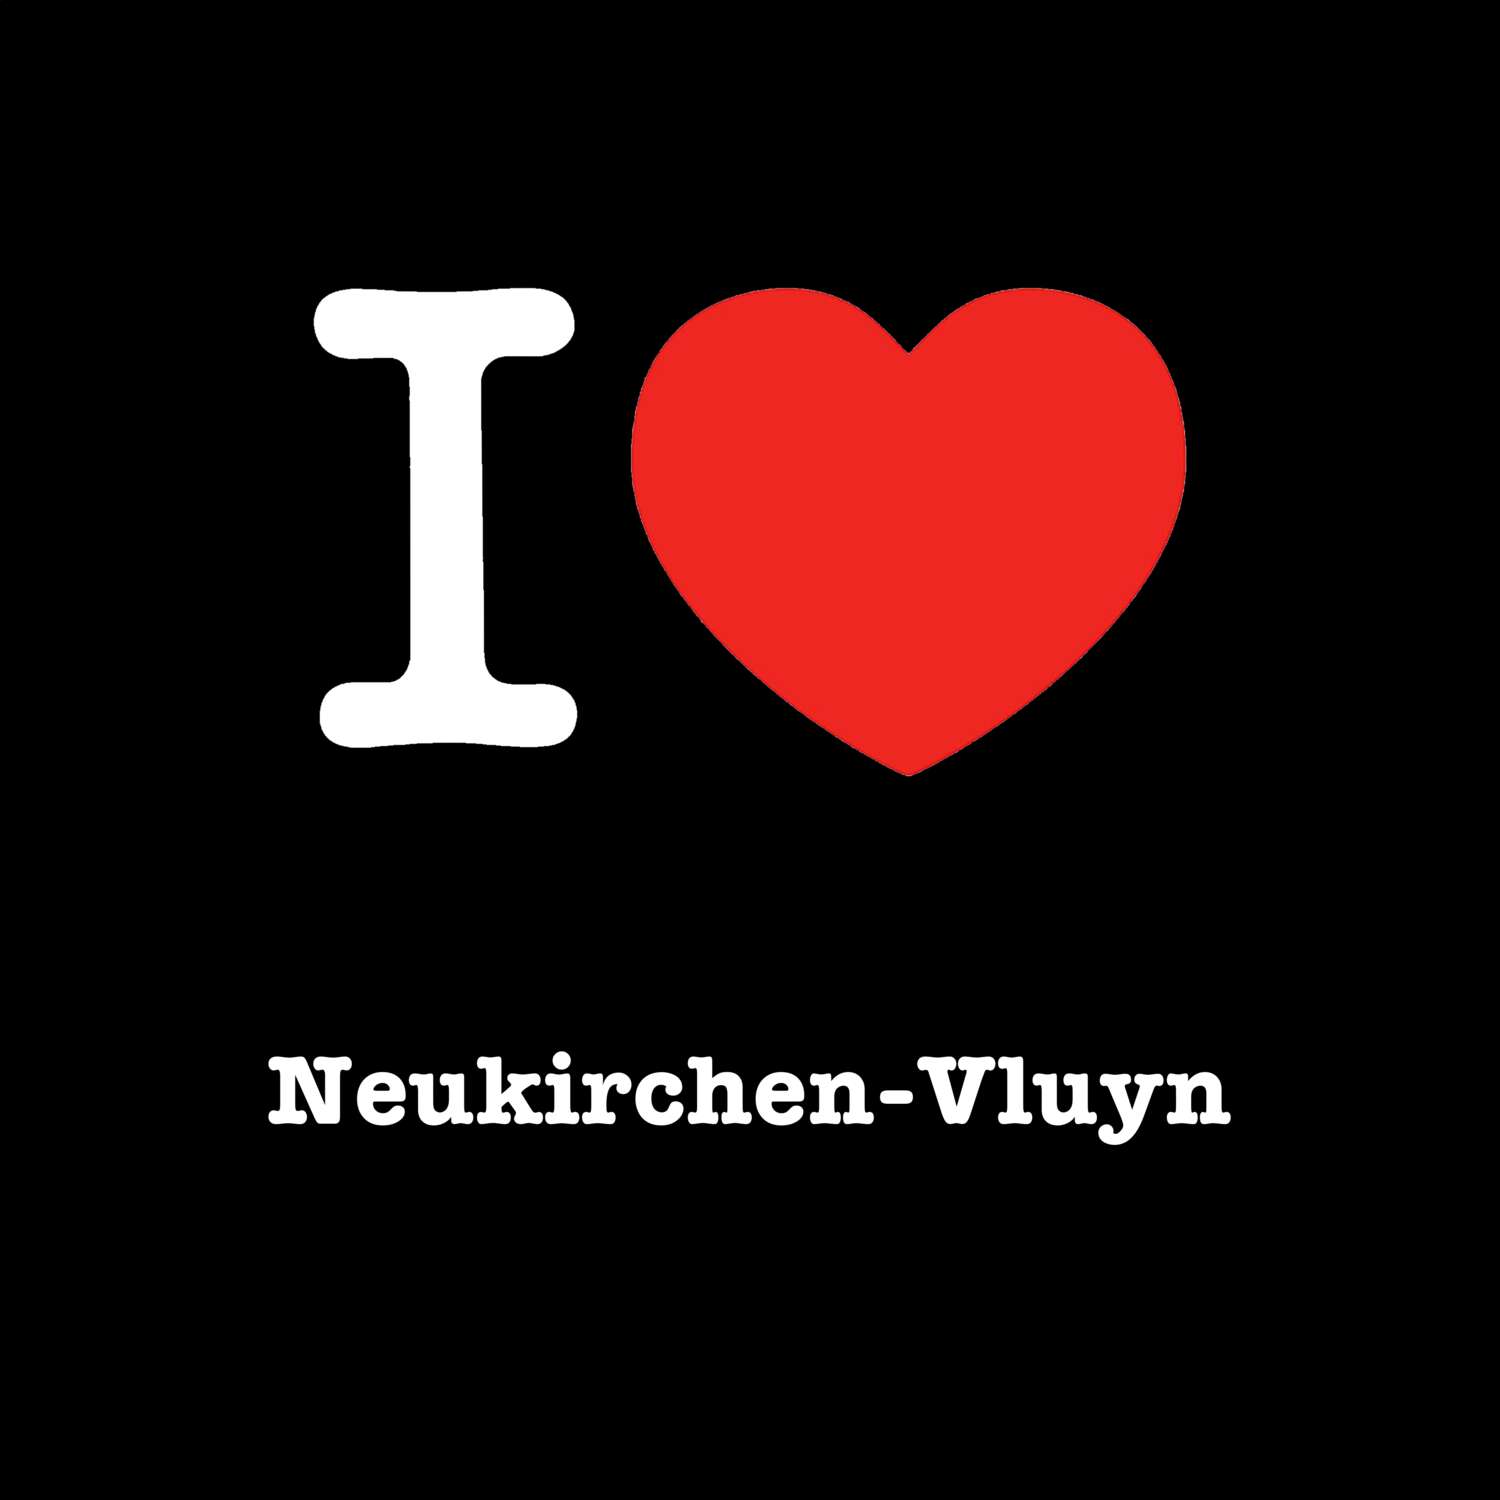 Neukirchen-Vluyn T-Shirt »I love«